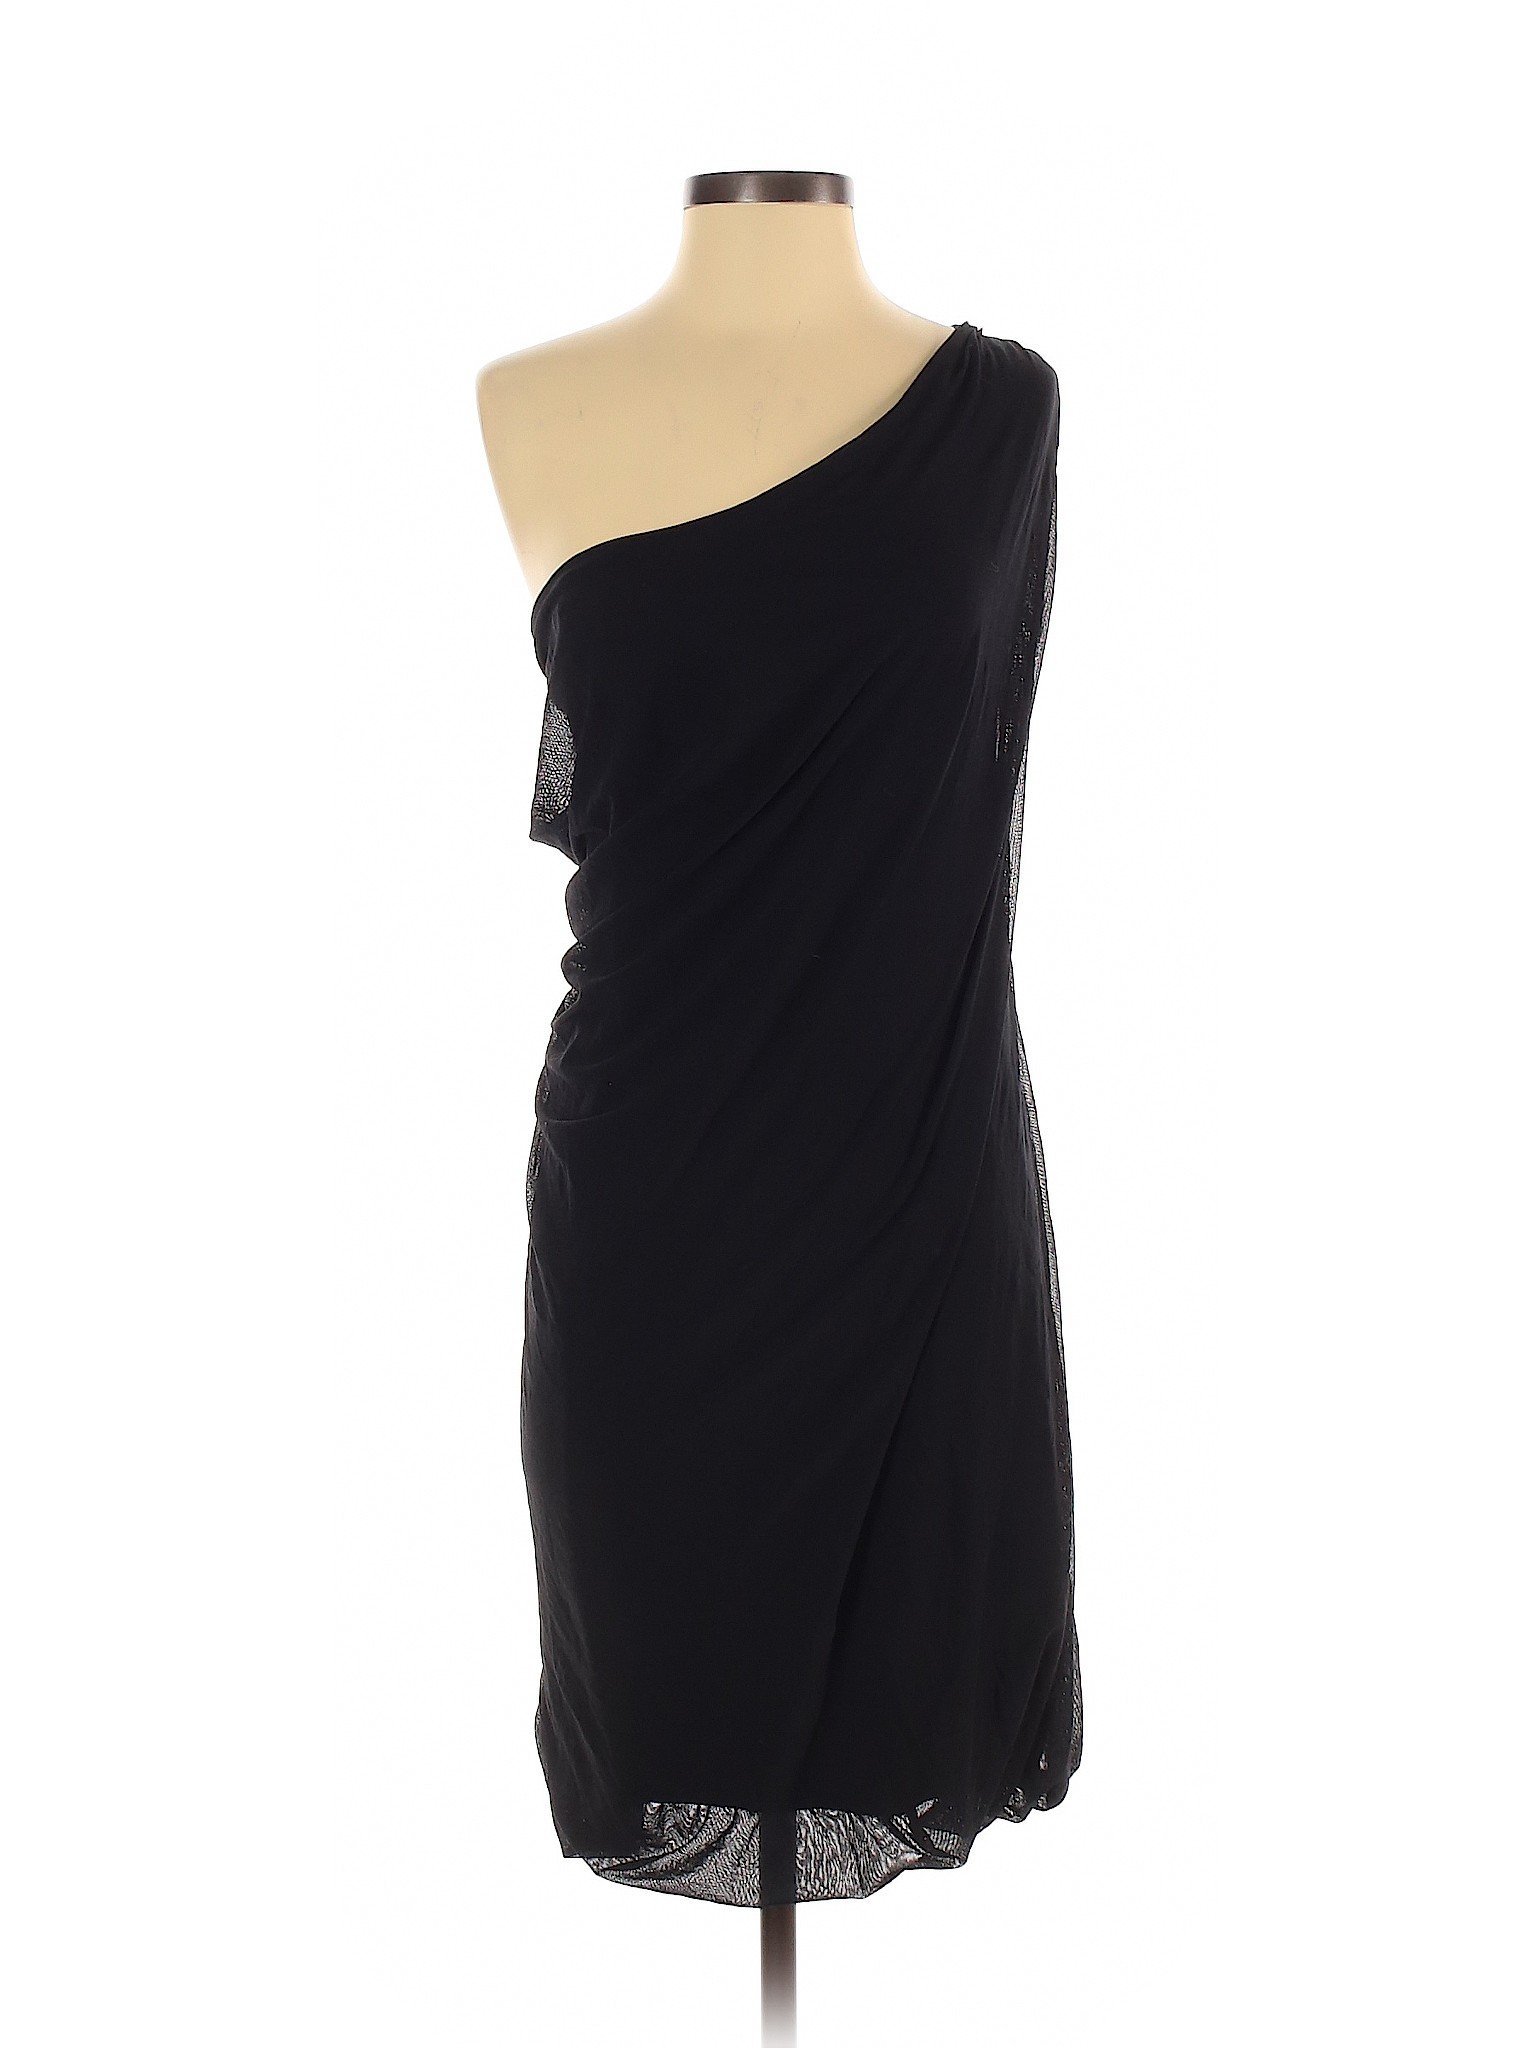 Vivienne Vivienne Tam Women Black Cocktail Dress S | eBay